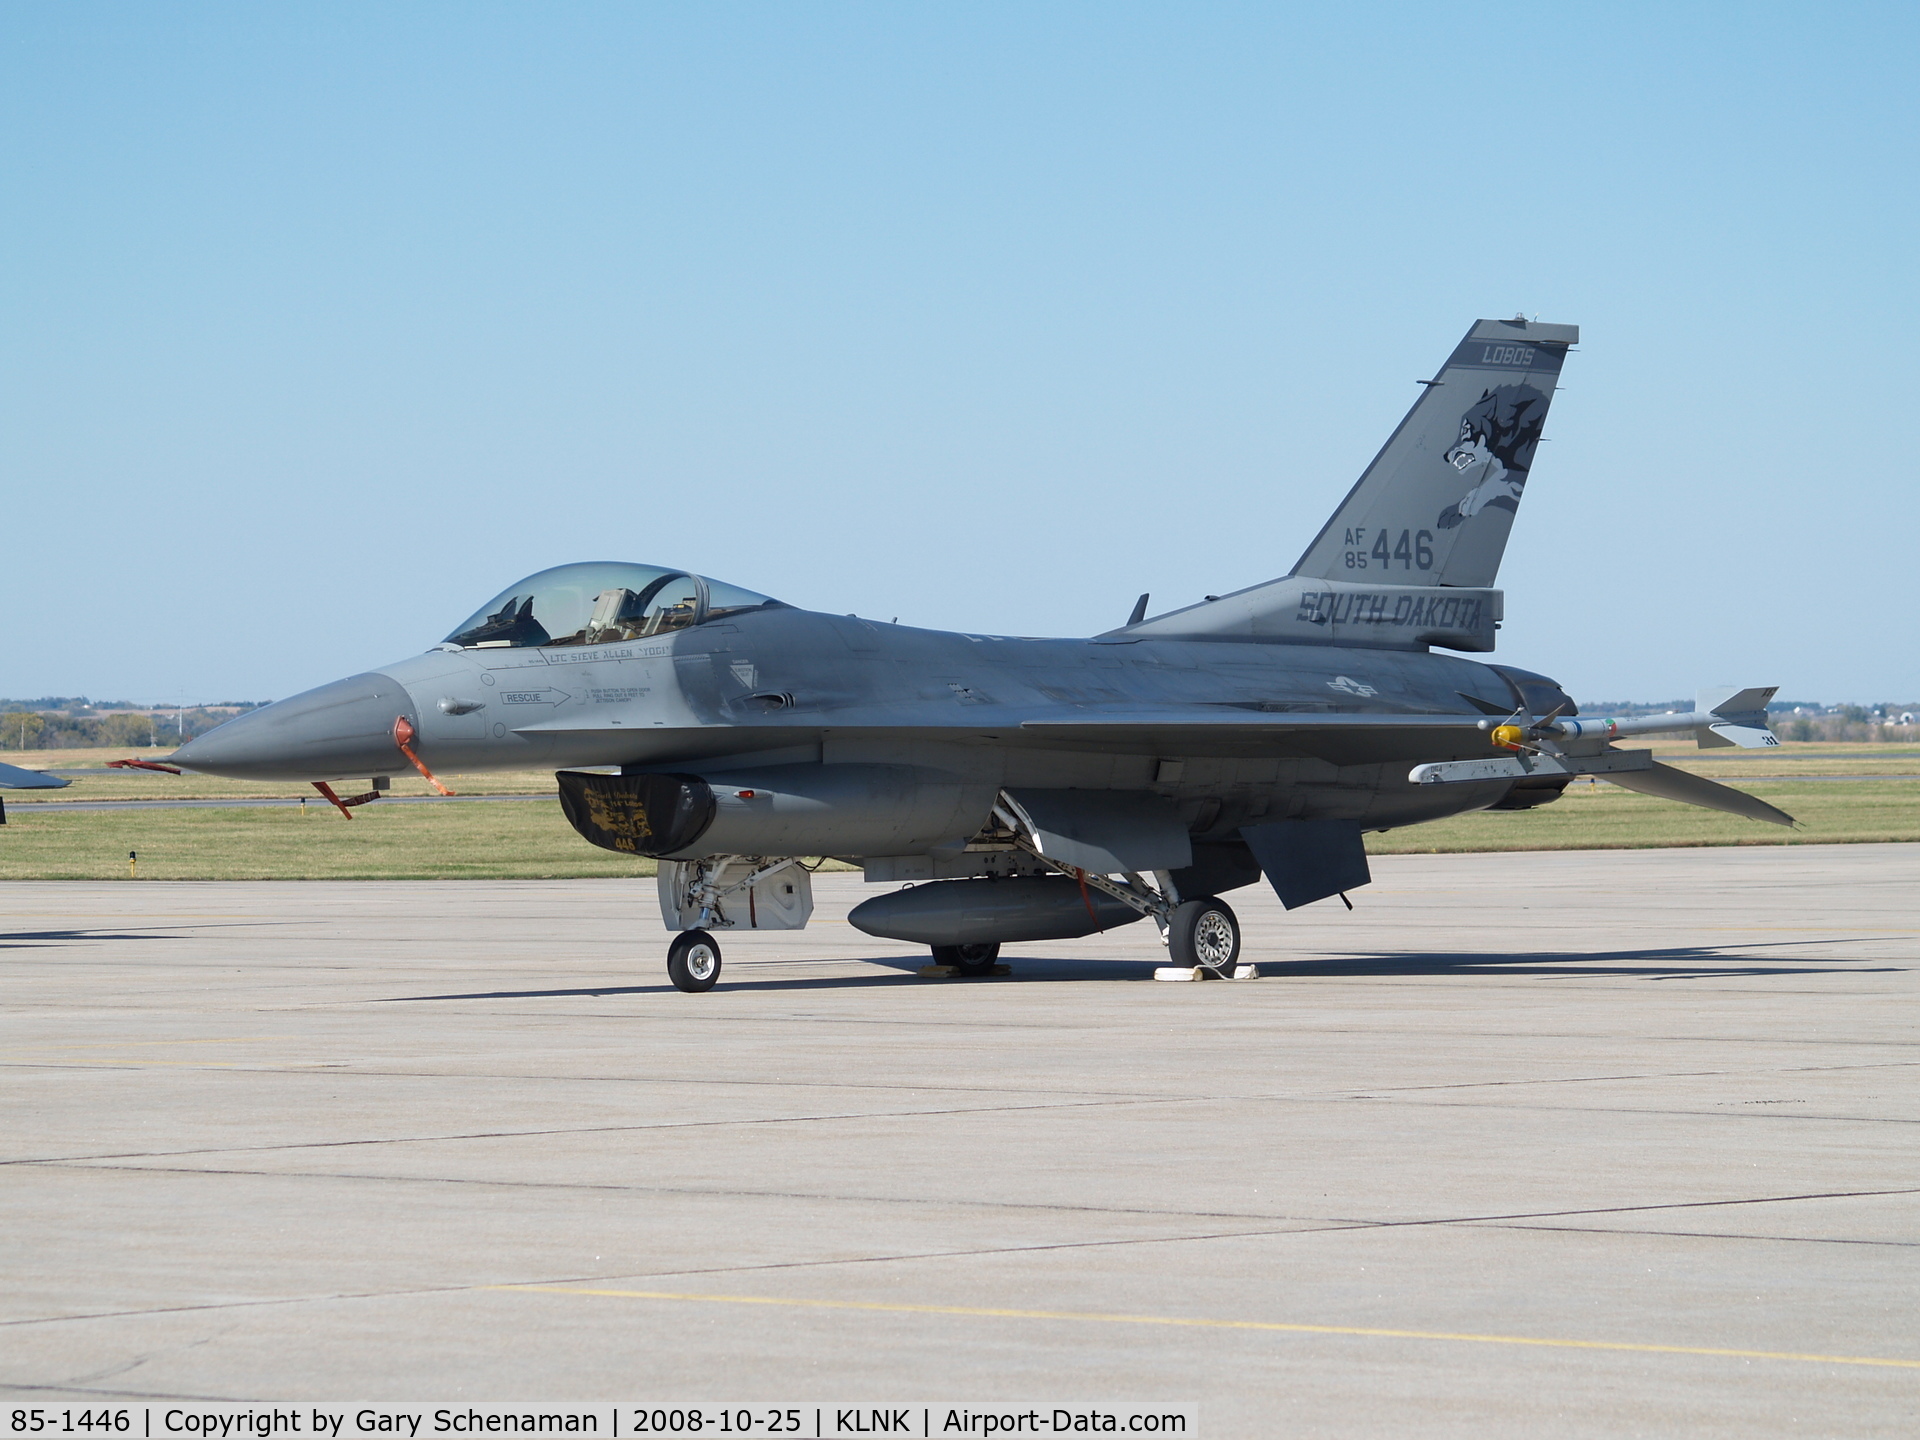 85-1446, 1985 General Dynamics F-16C Fighting Falcon C/N 5C-226, F-16 FIGHTING FALCON FROM SOUTH DAKOTA